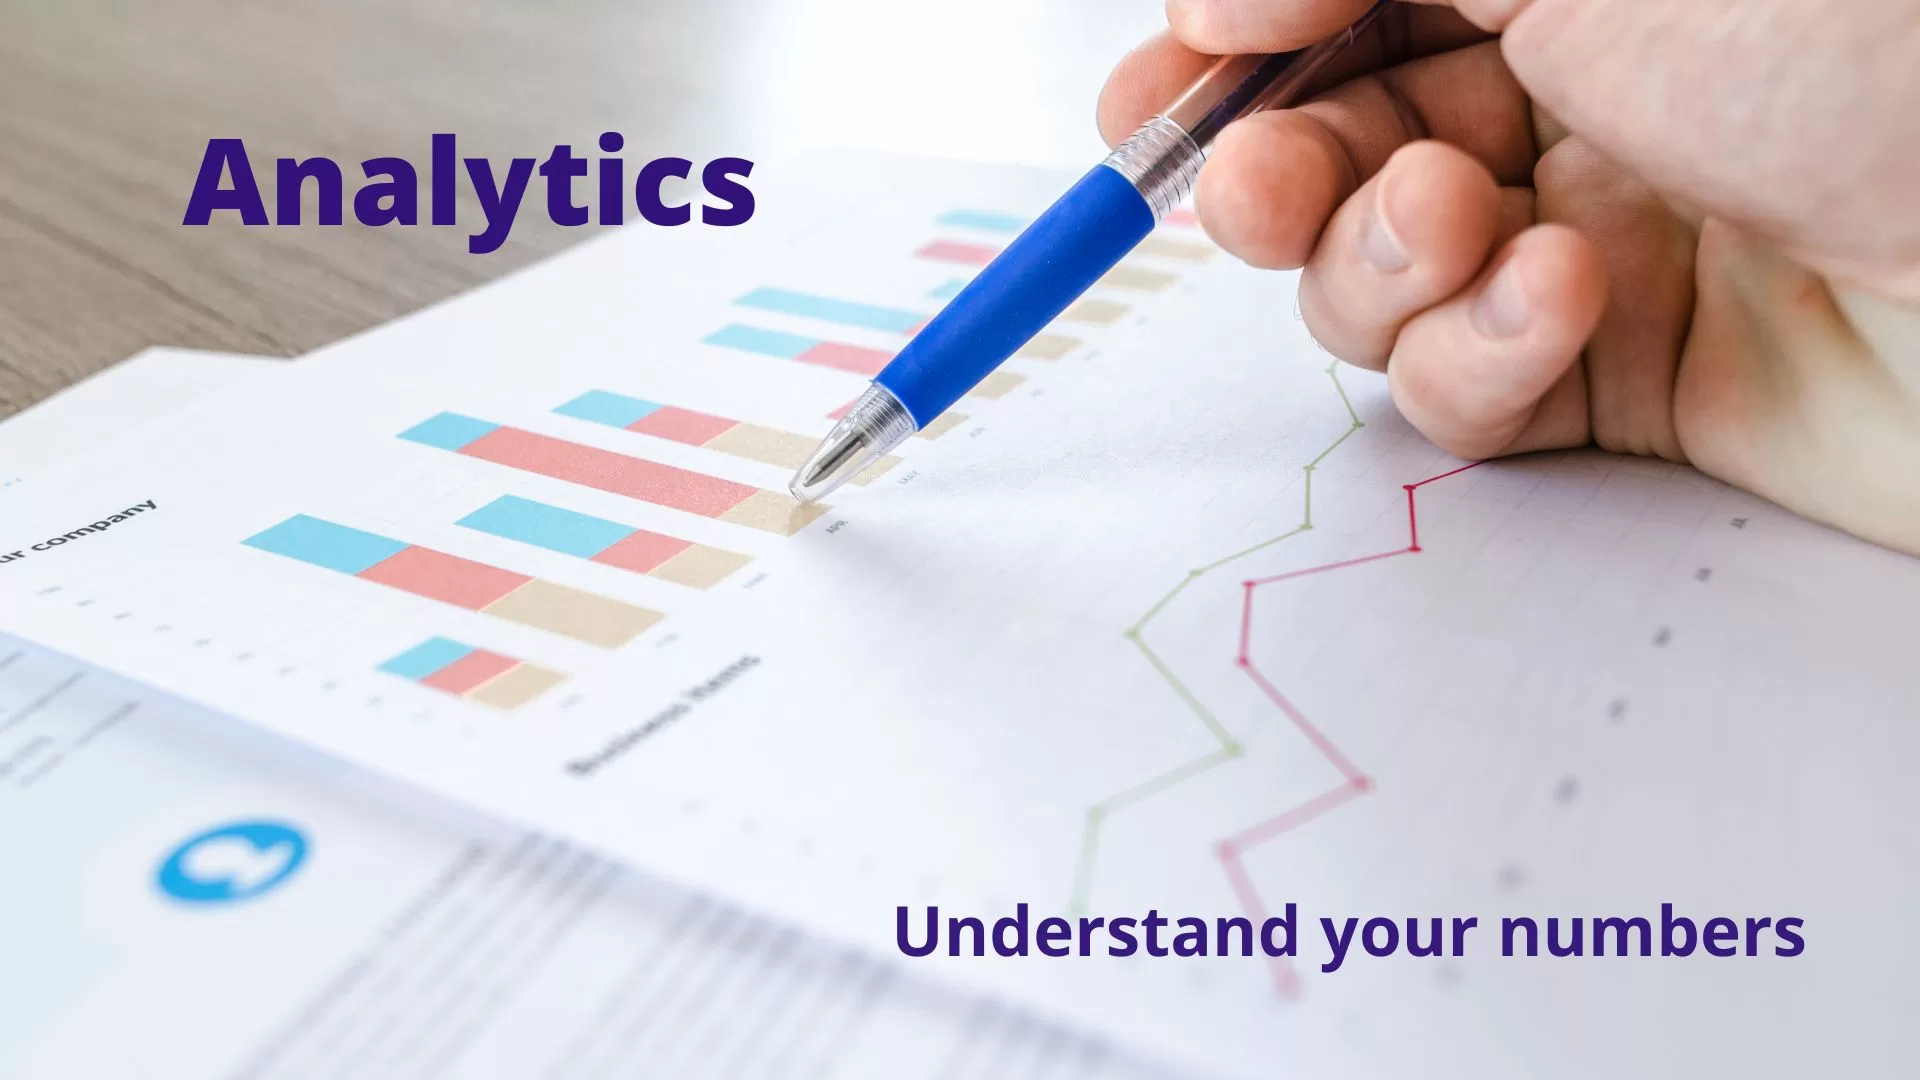 Analytics - Understand your numbers